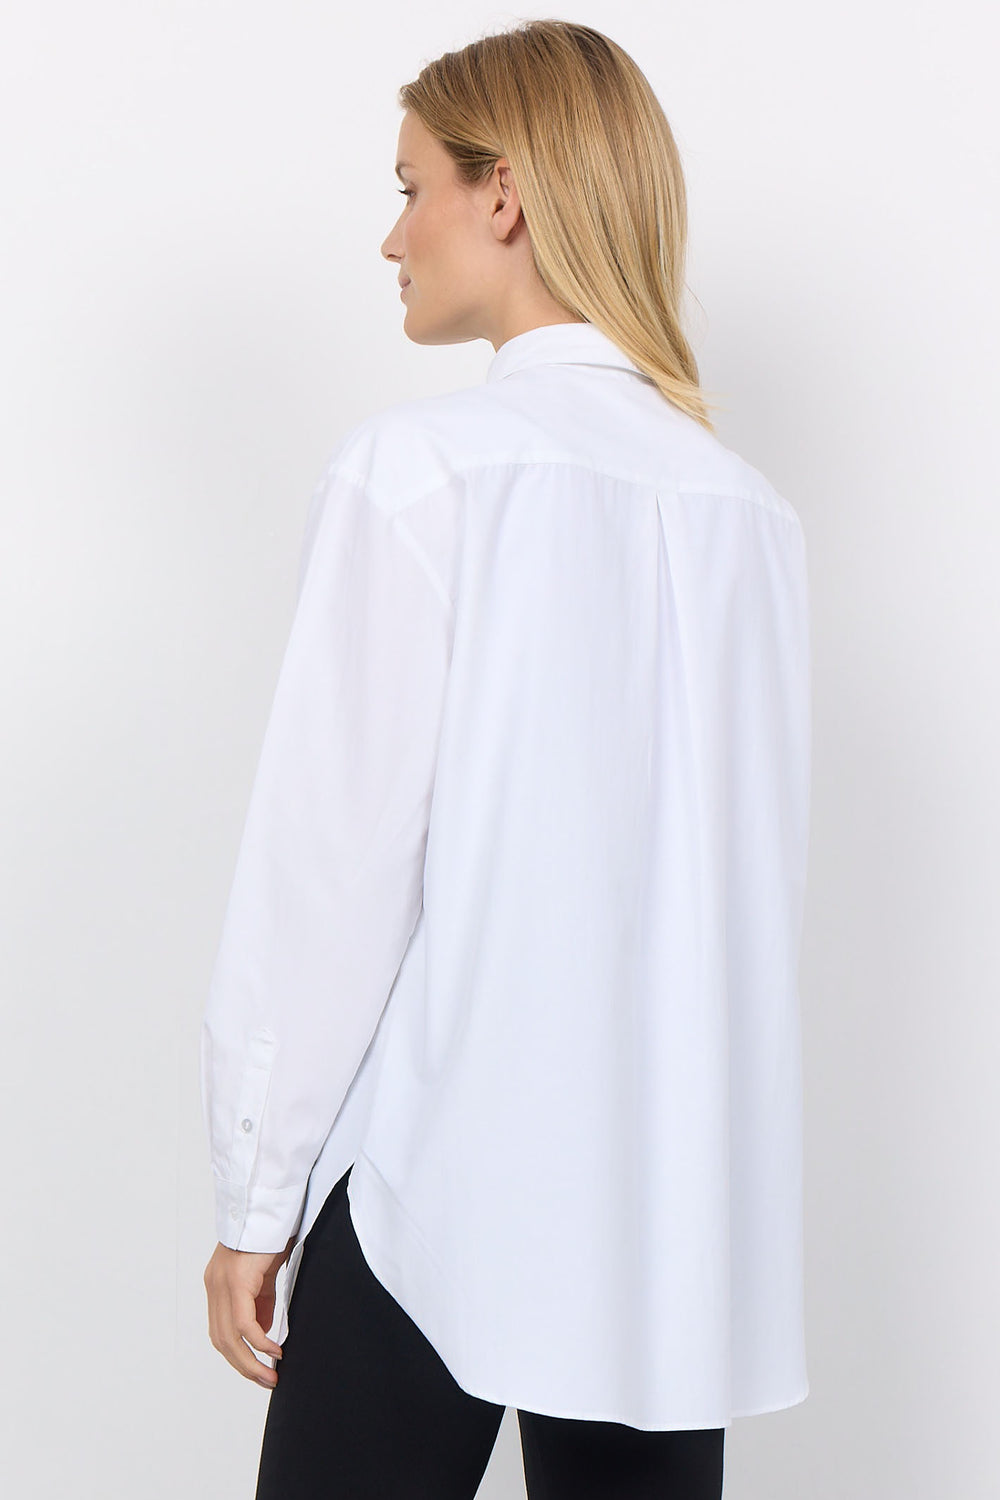 Soya Concept SC-Netti 52 40261-20 White Long Sleeve Shirt - Dotique